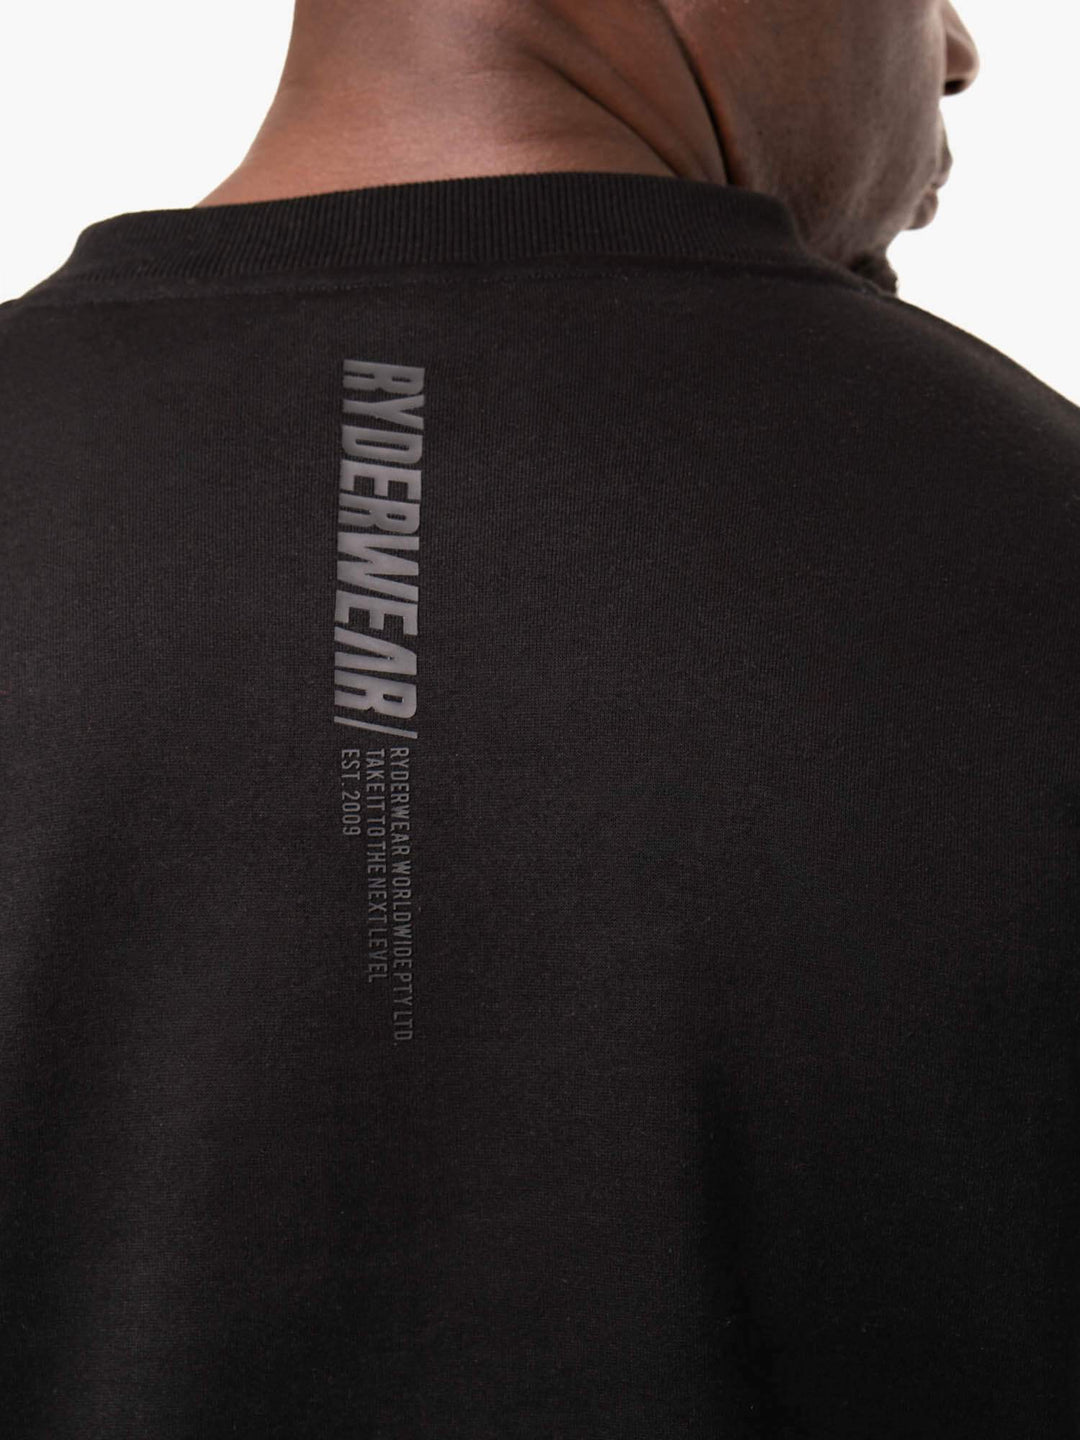 Reset Fleece Crew Neck - Black Clothing Ryderwear 